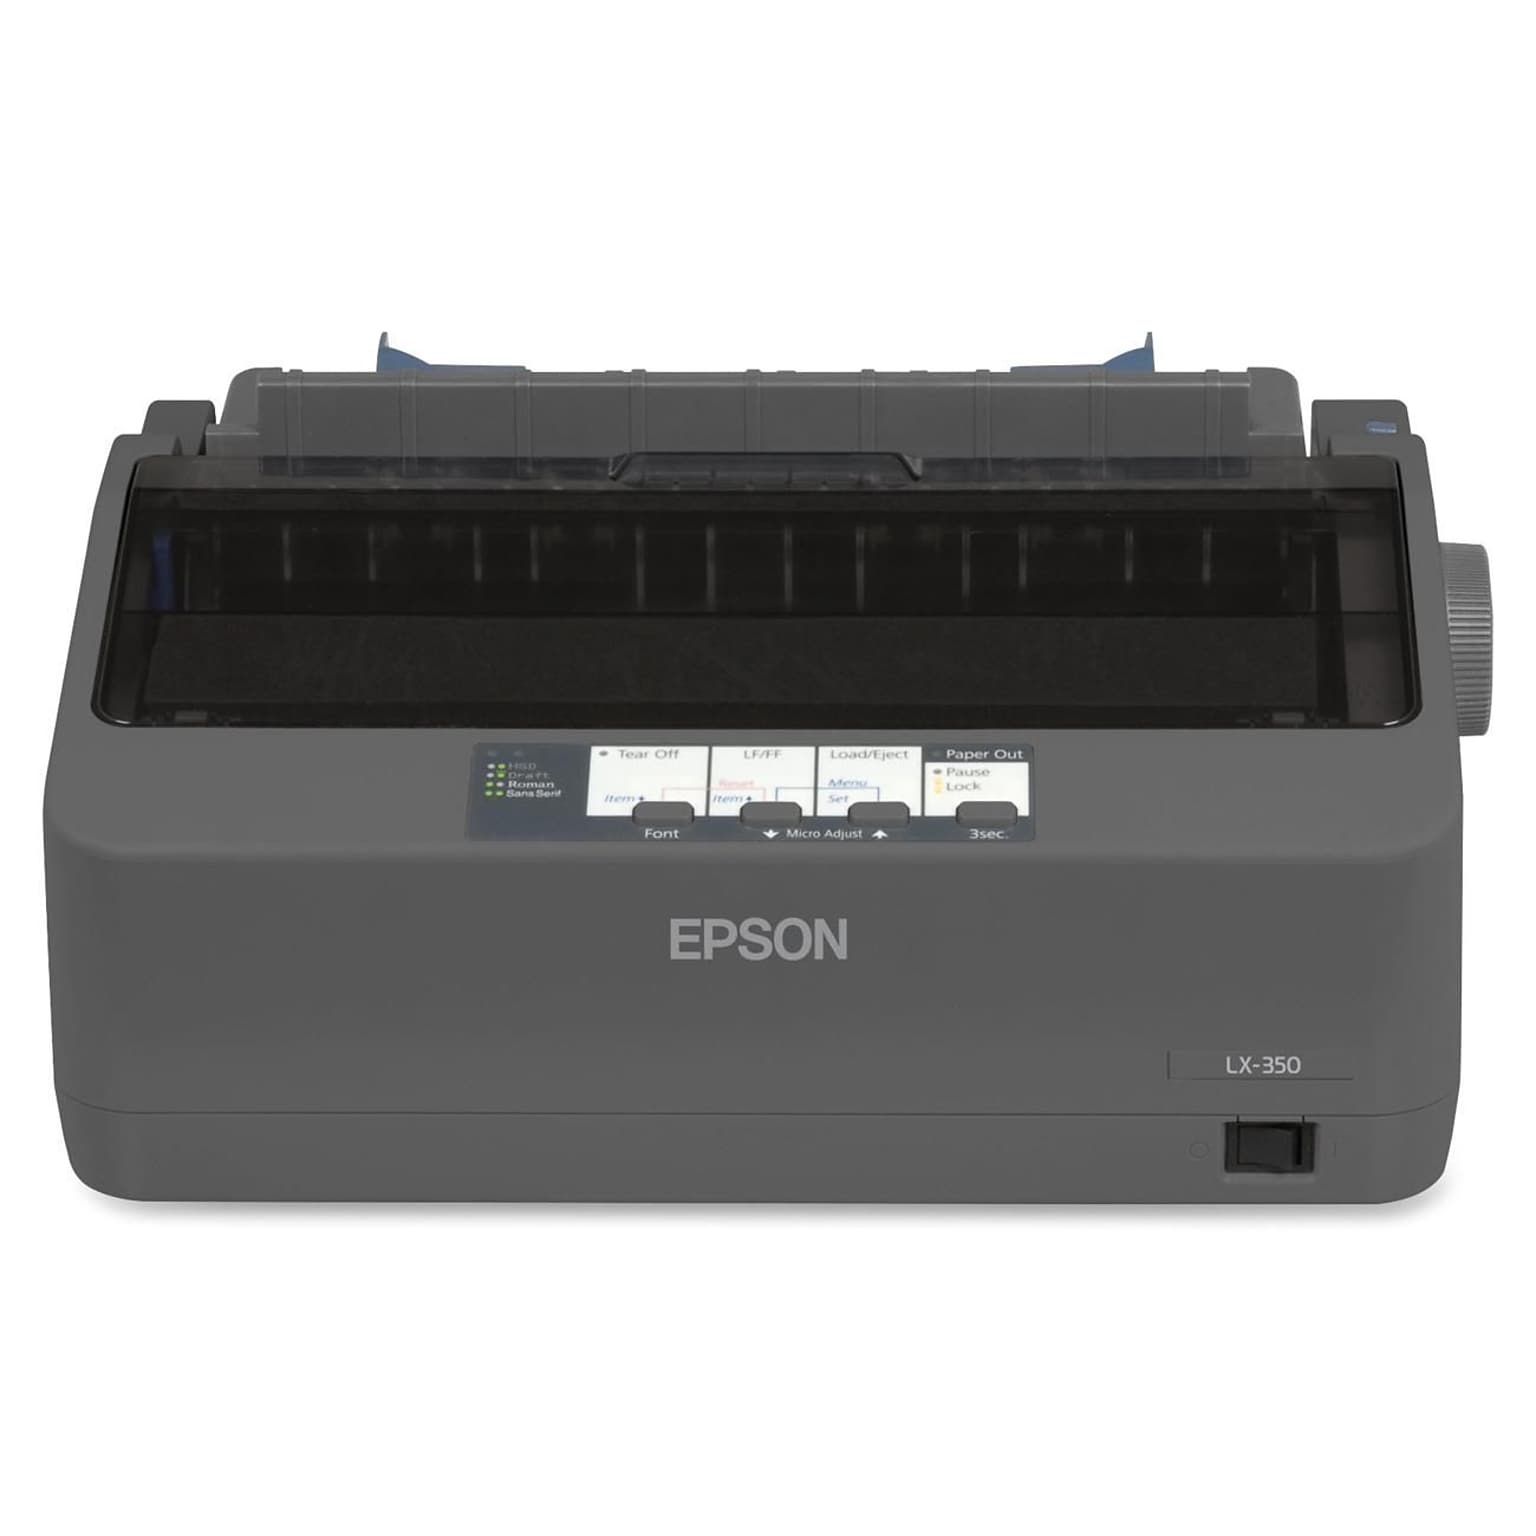 Epson® LX-350 C11CC24001 Monochrome Dot Matrix Printer